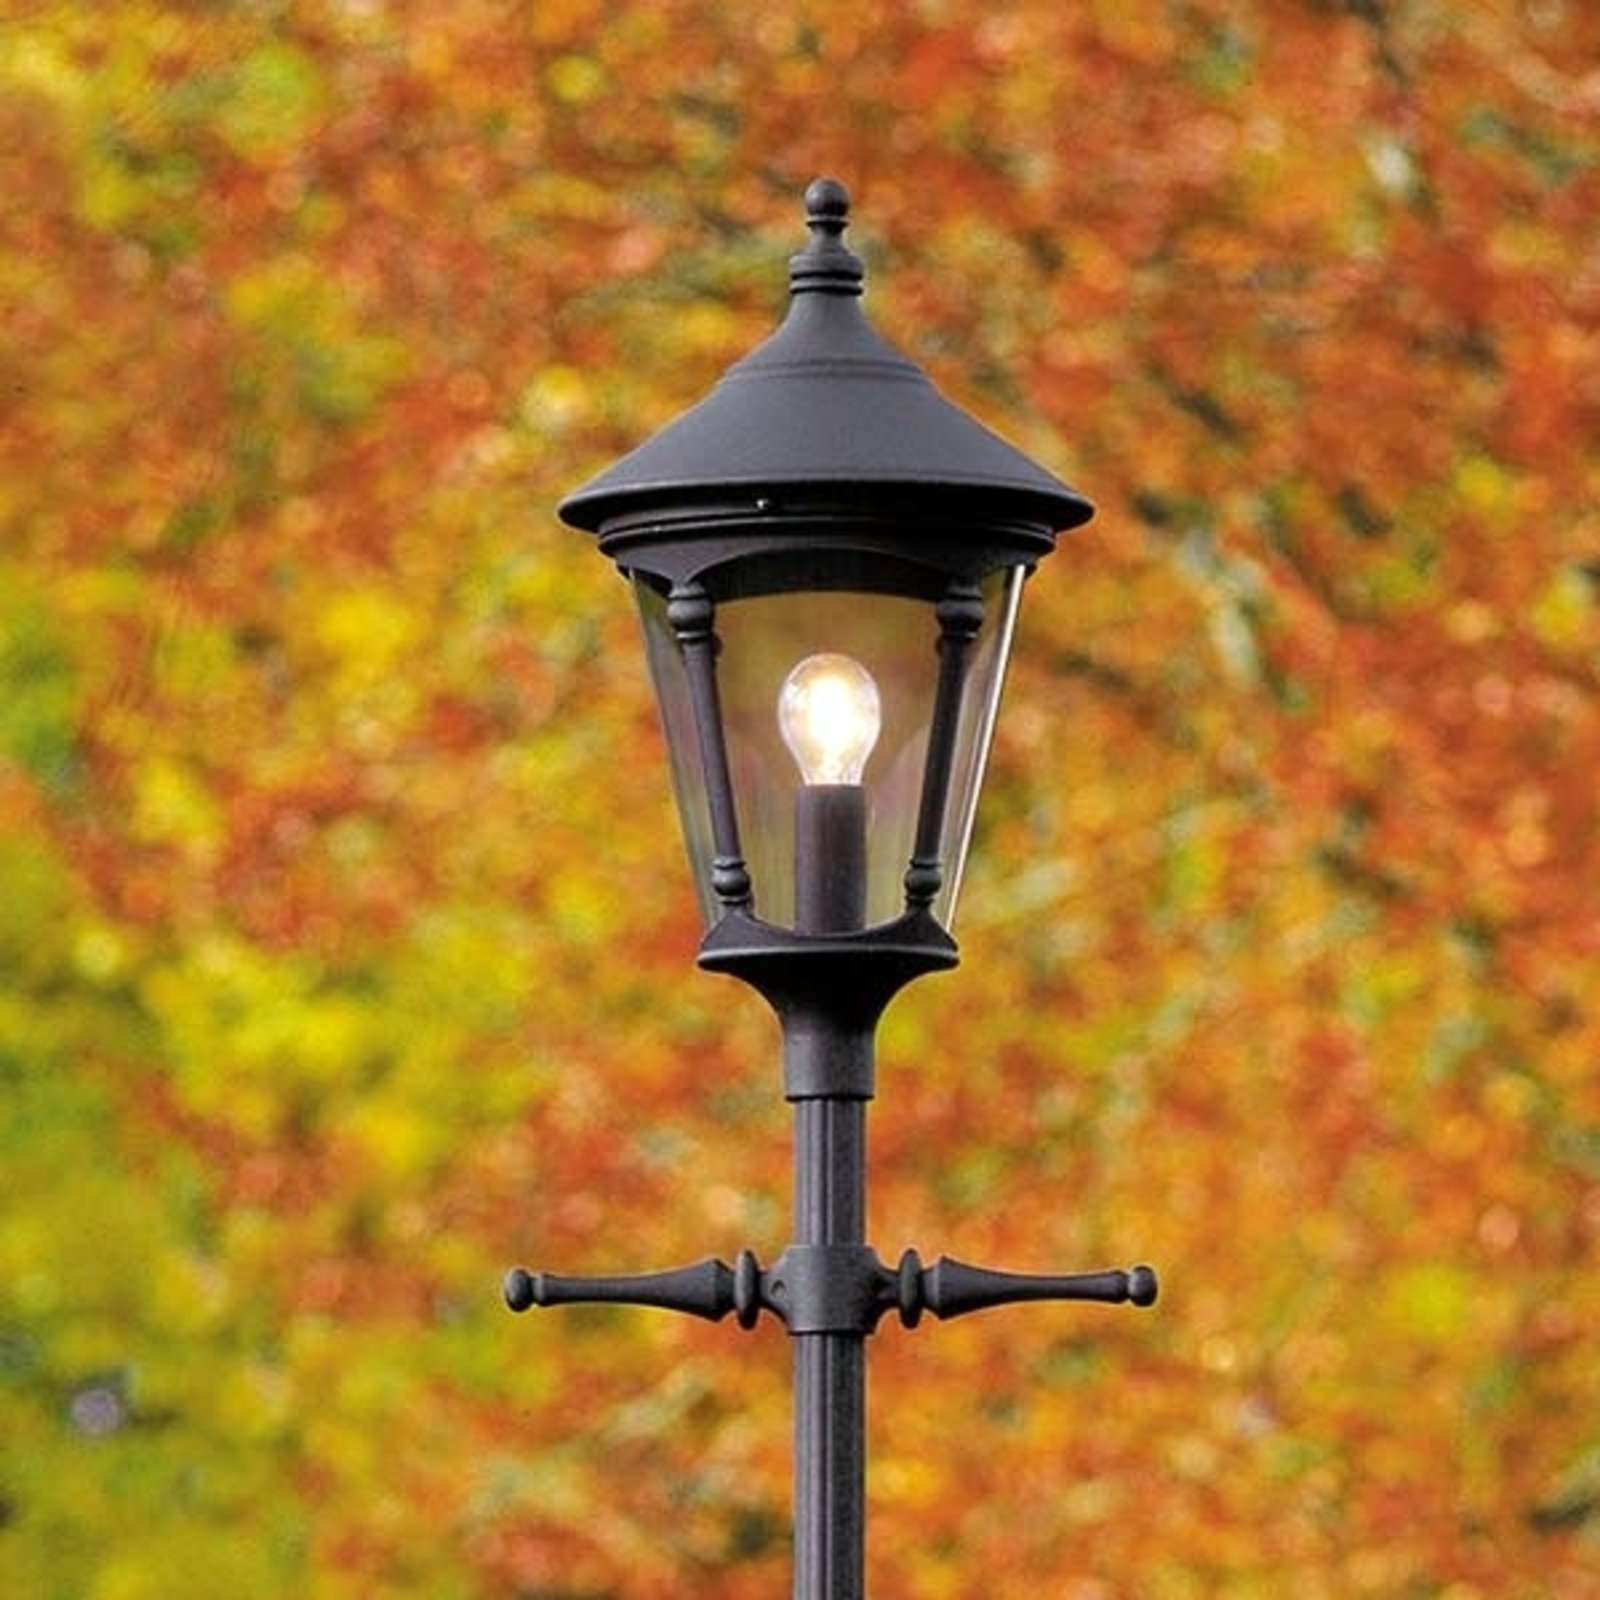 Virgo lamp post, 1-bulb, matt black